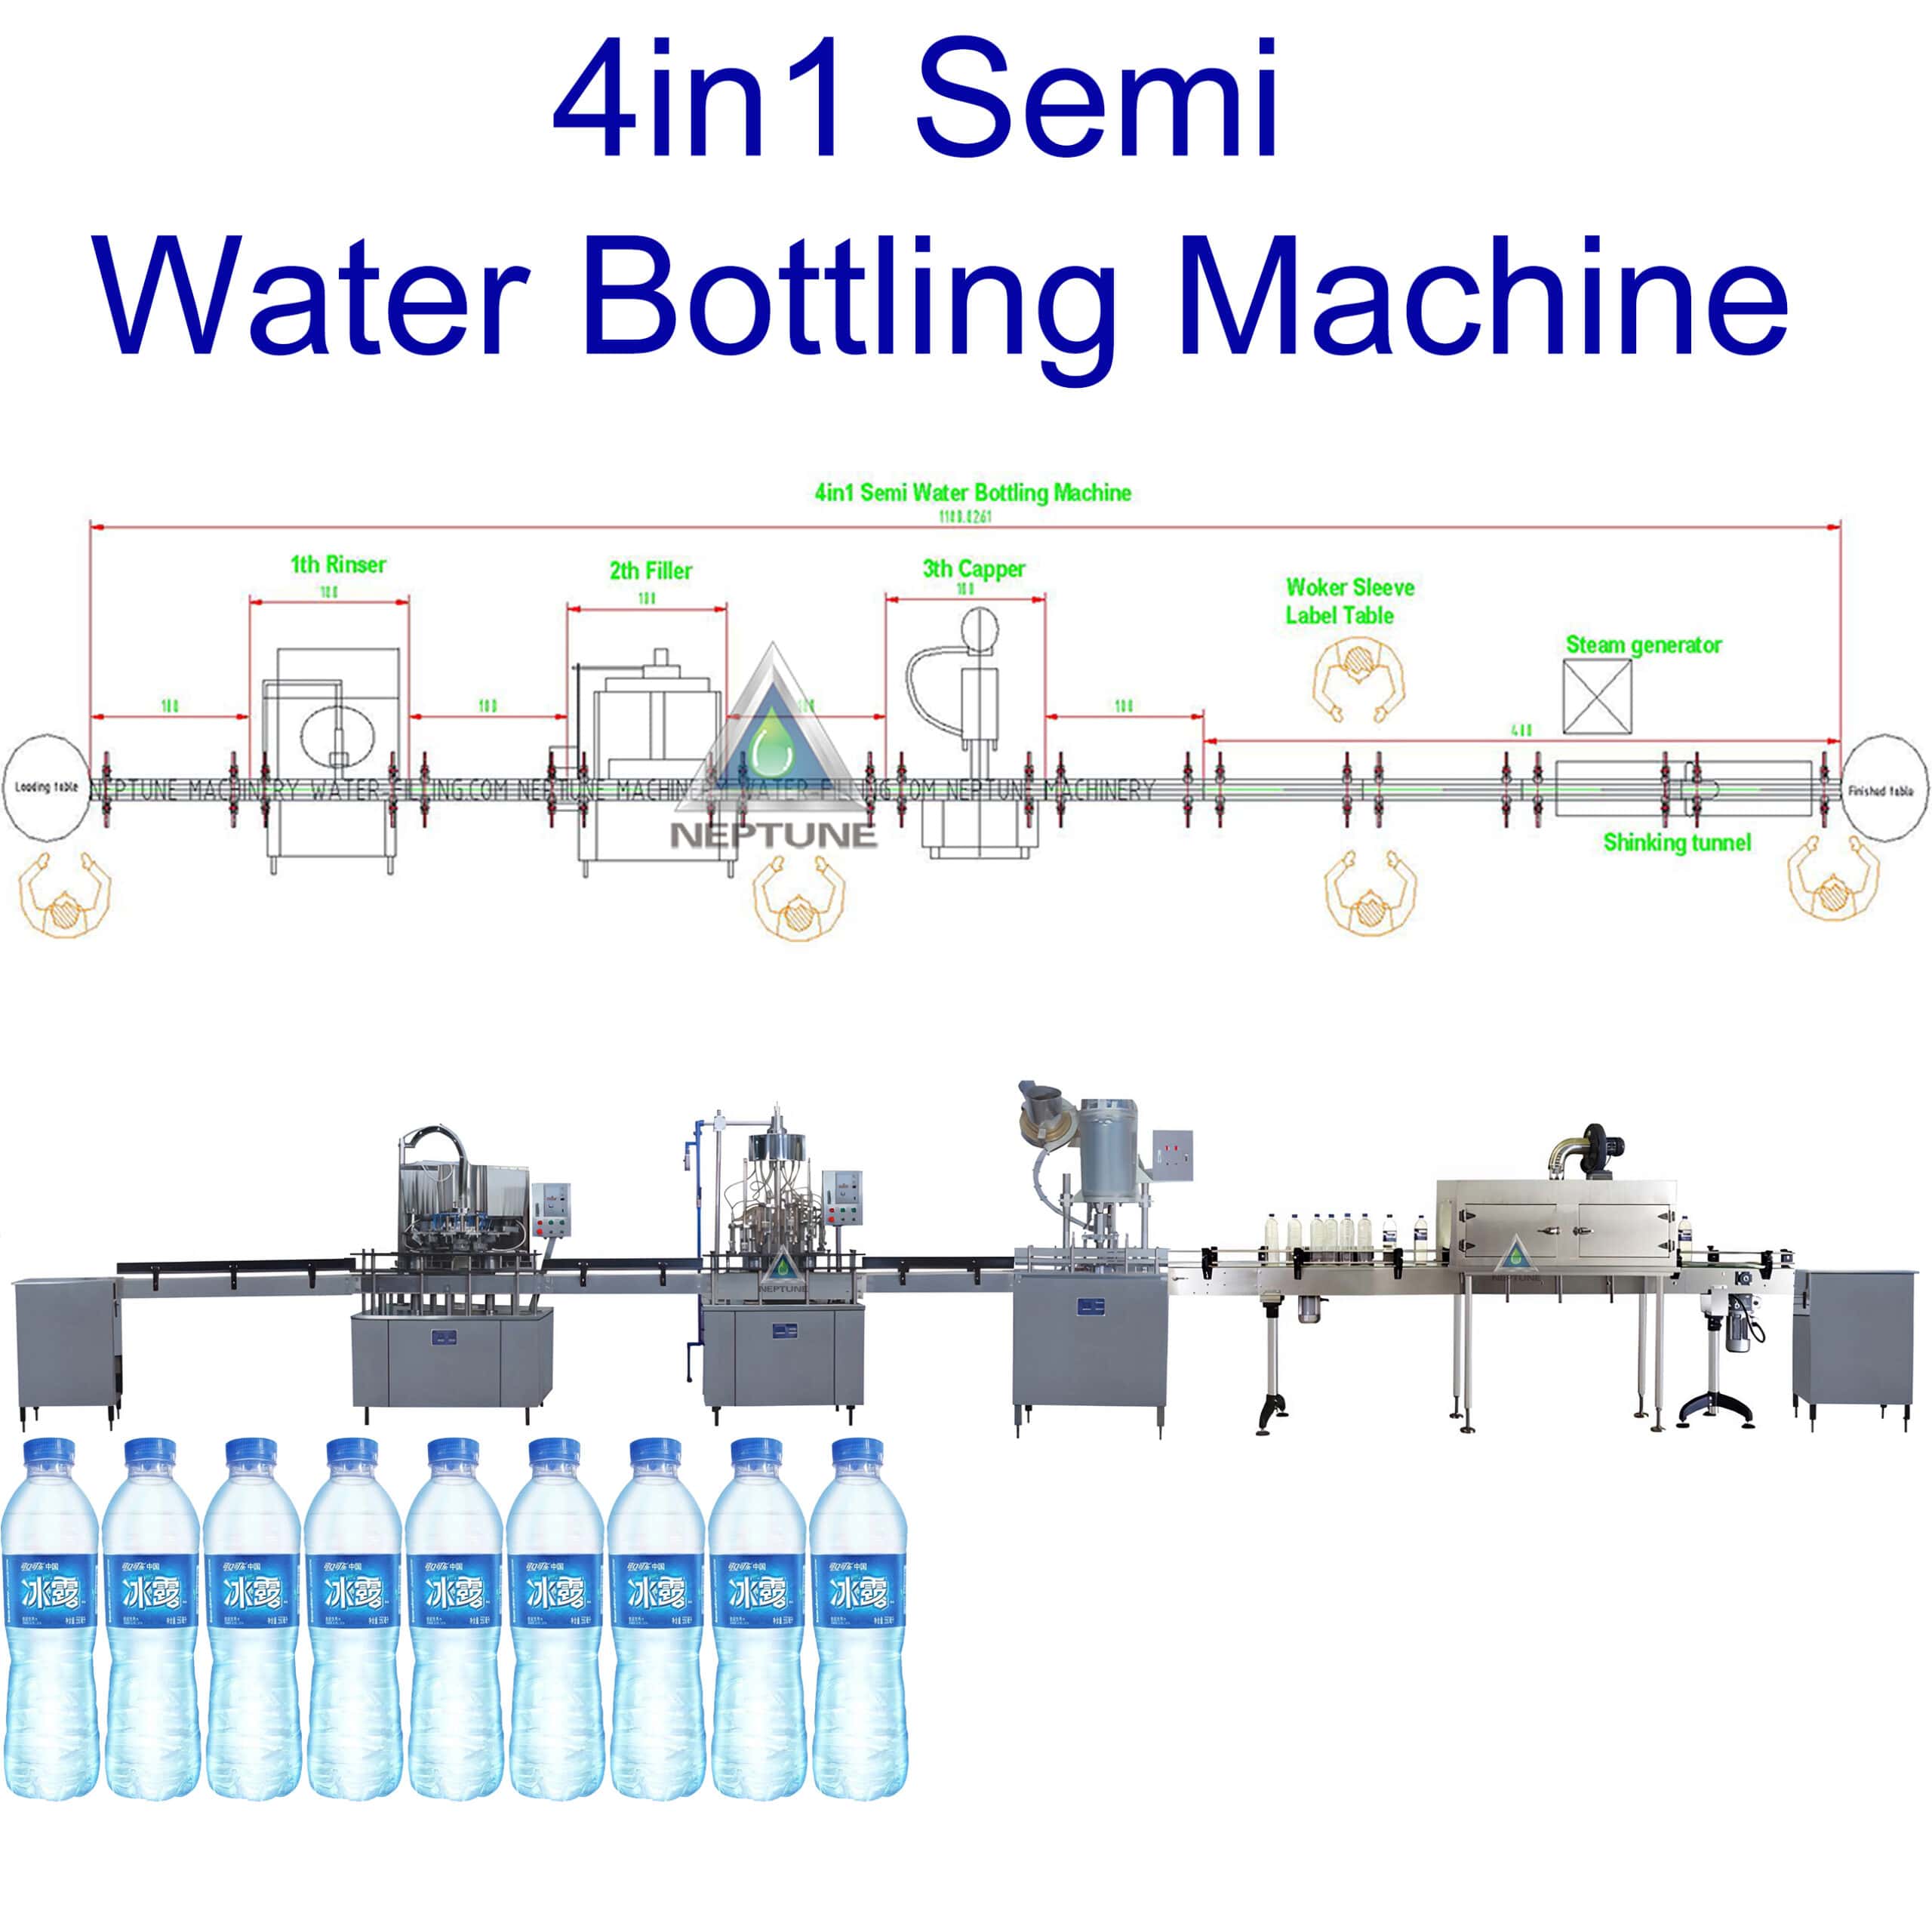 4in1 Semi water bottling machine line scaled